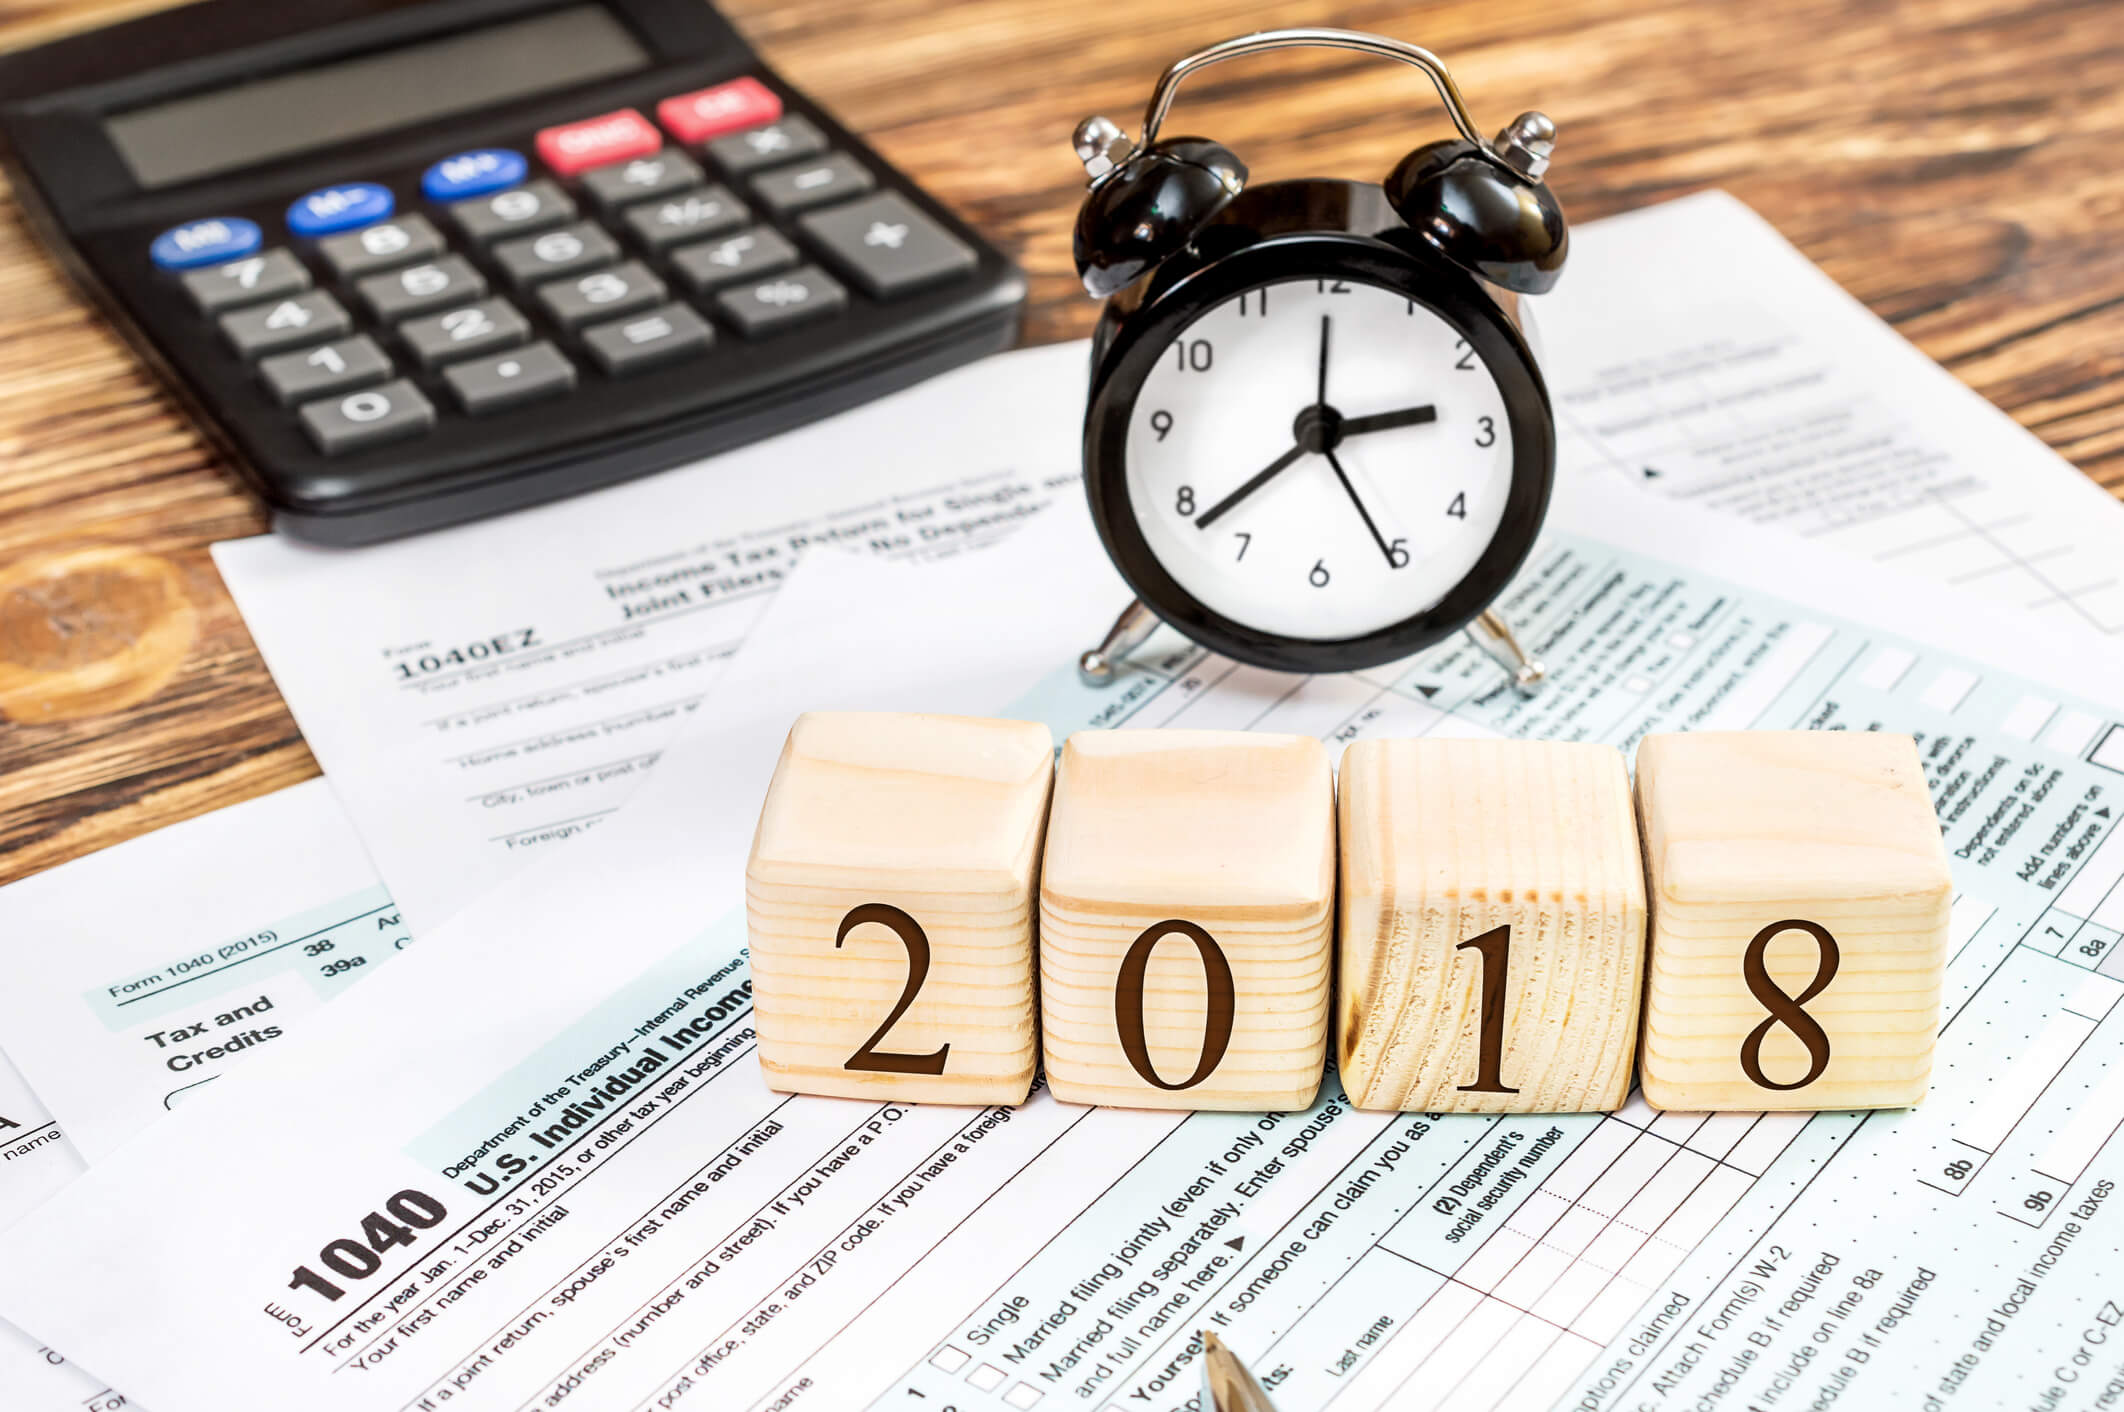 2018 Tax deadlines - Complete Controller